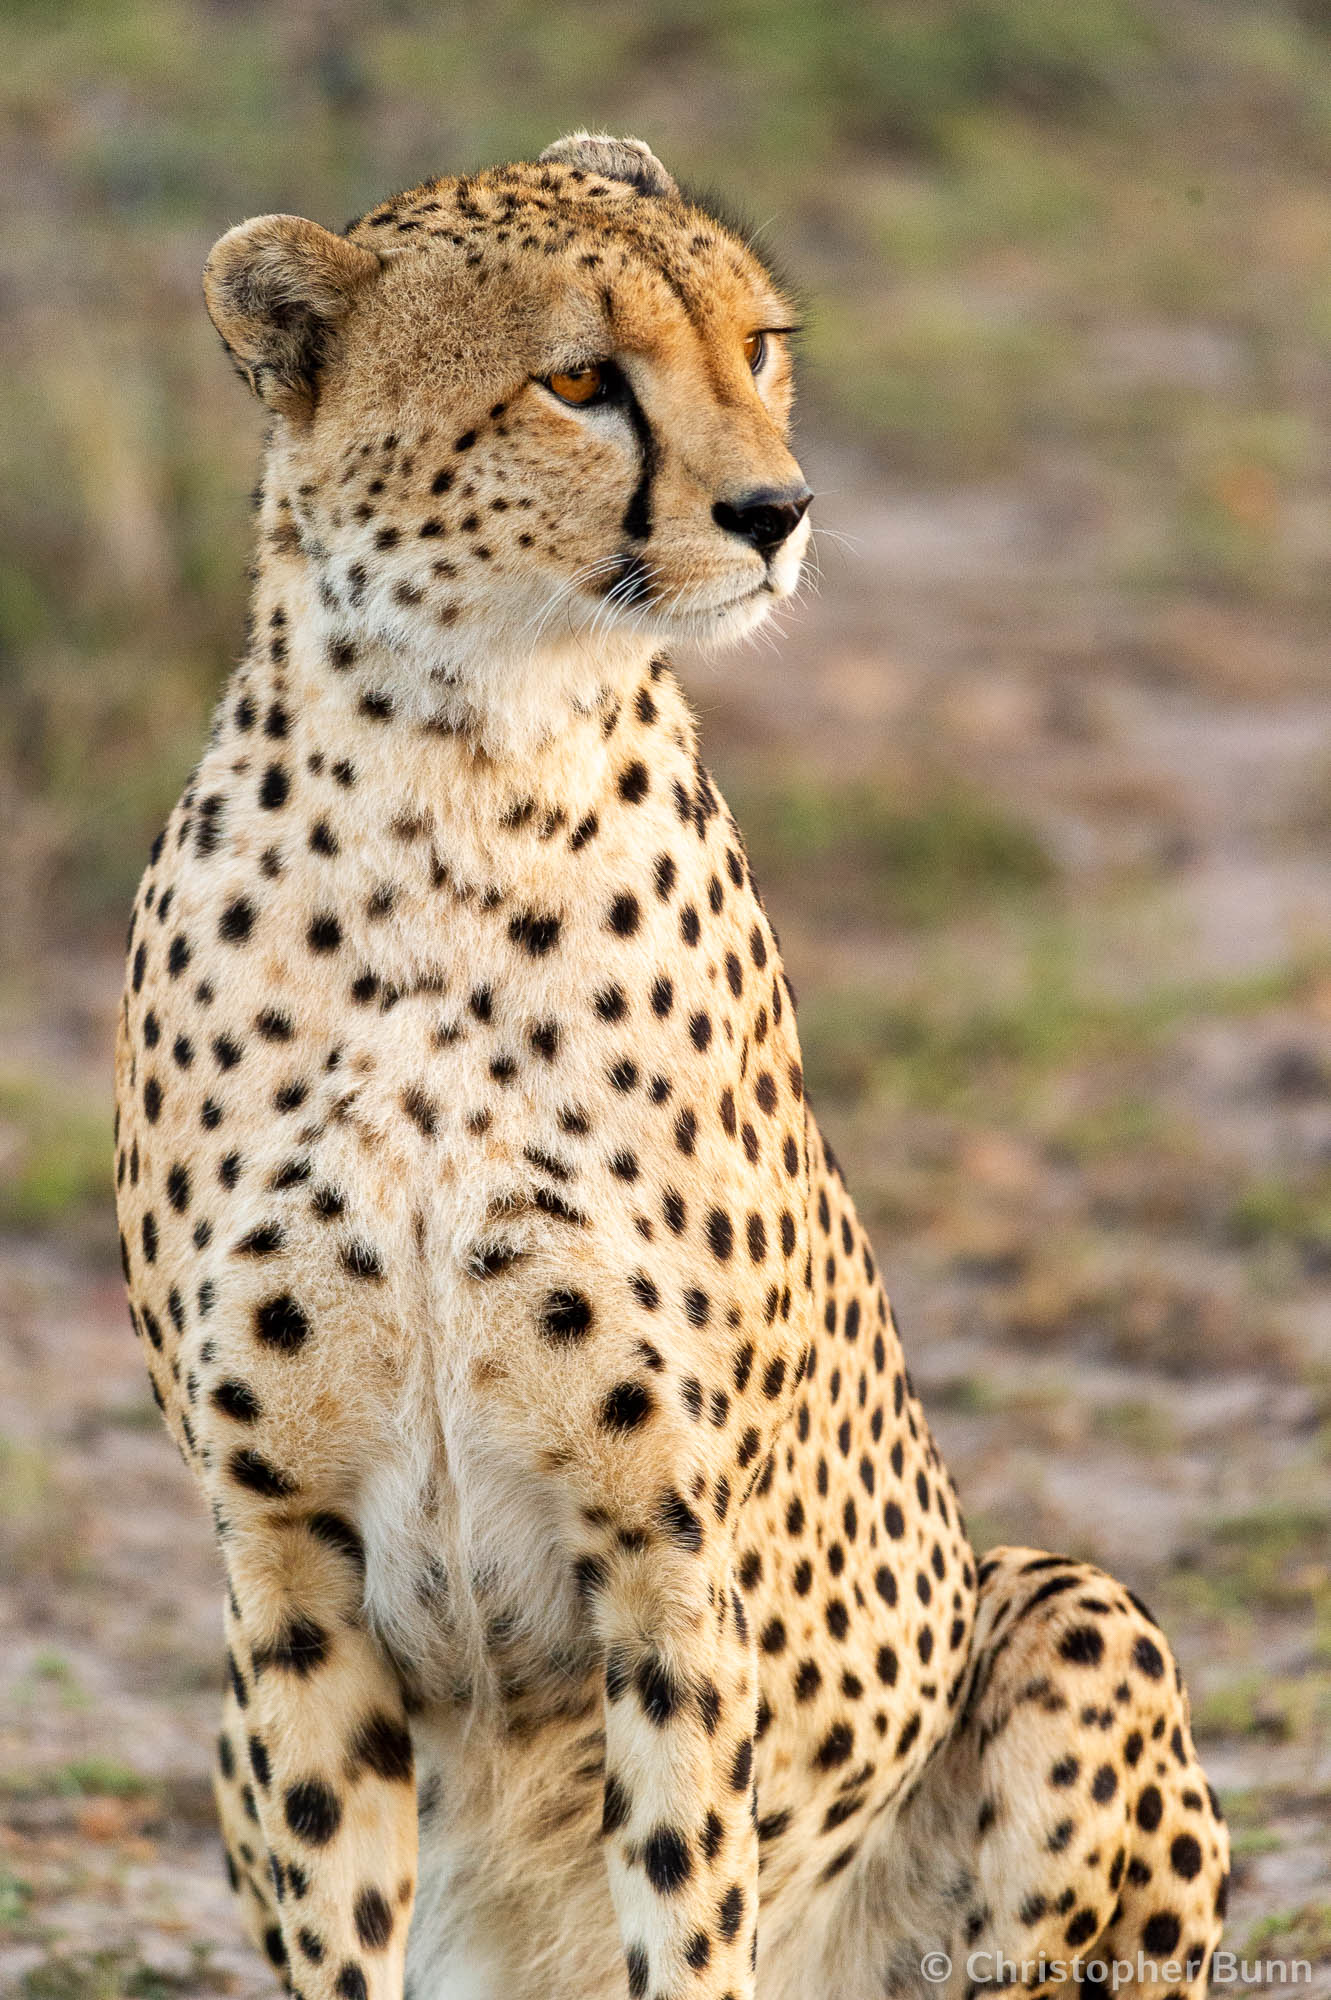 A cheetah in Maasai Mara National Park, Kenya.